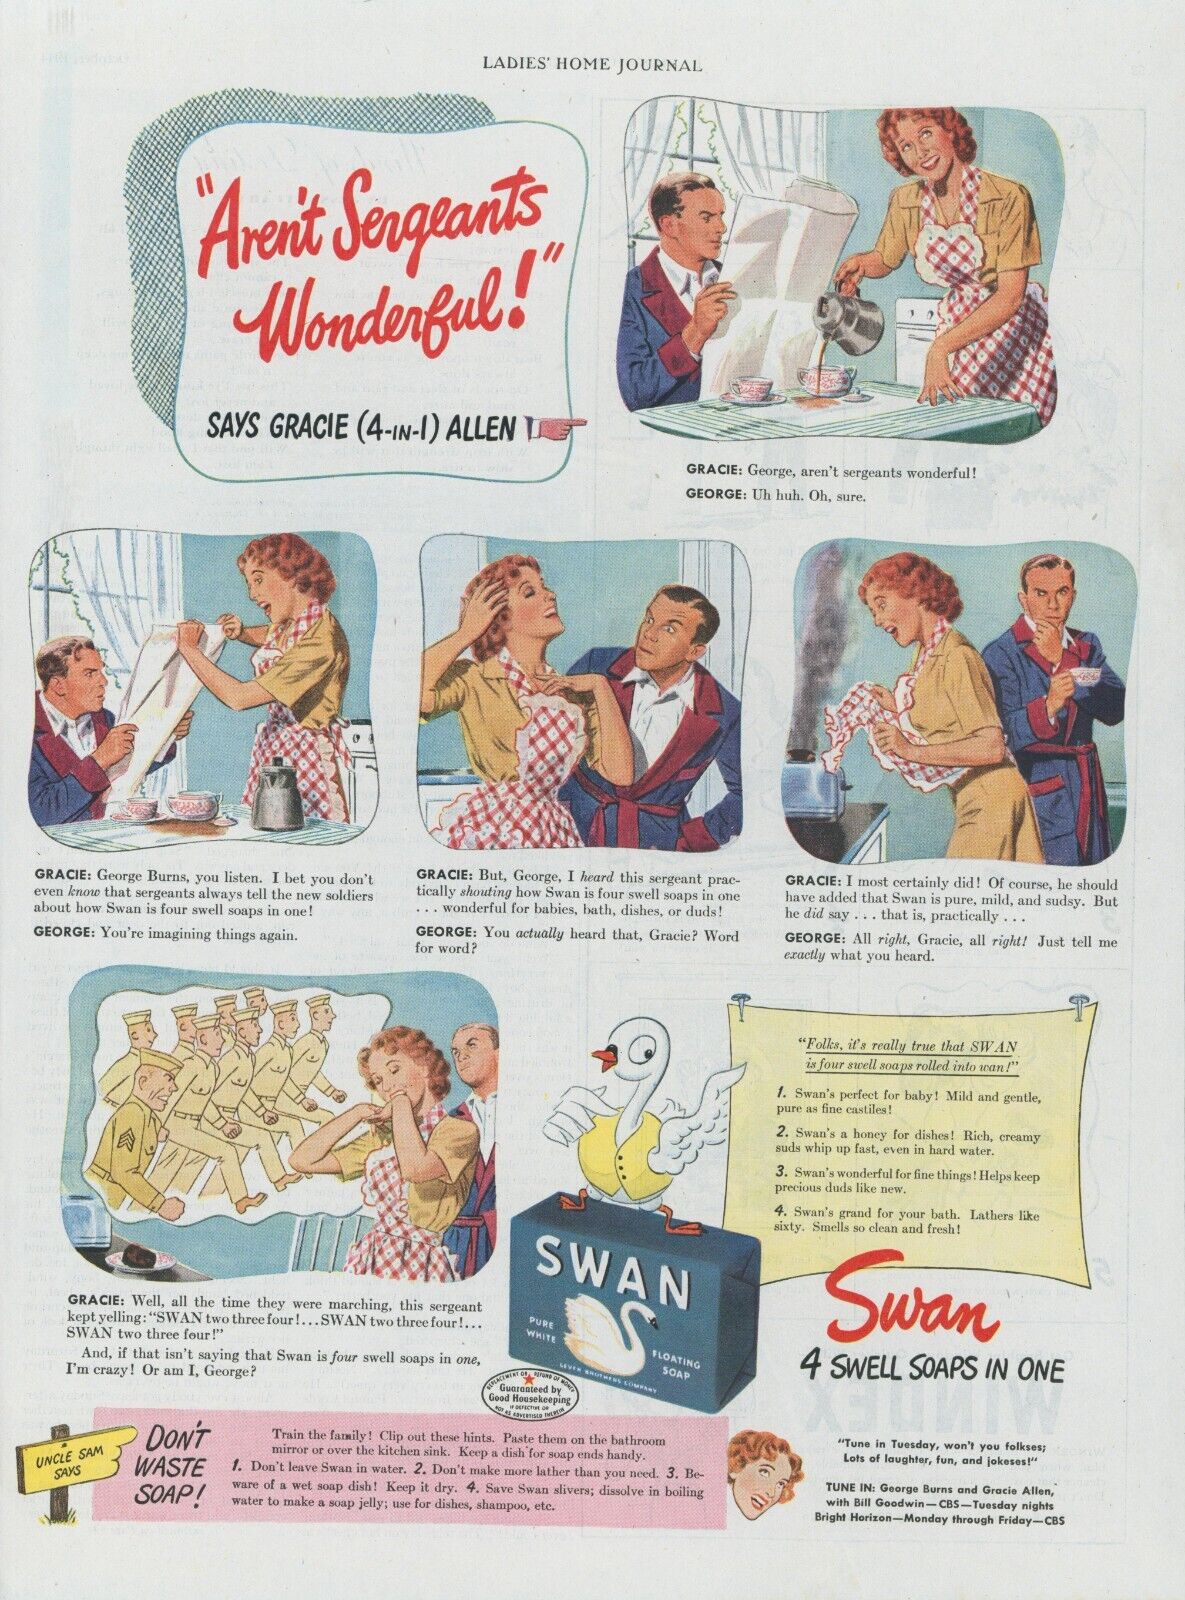 1944 Swan Soap Gracie Allen George Burns Sergeants Wonderful Print Ad LHJ1